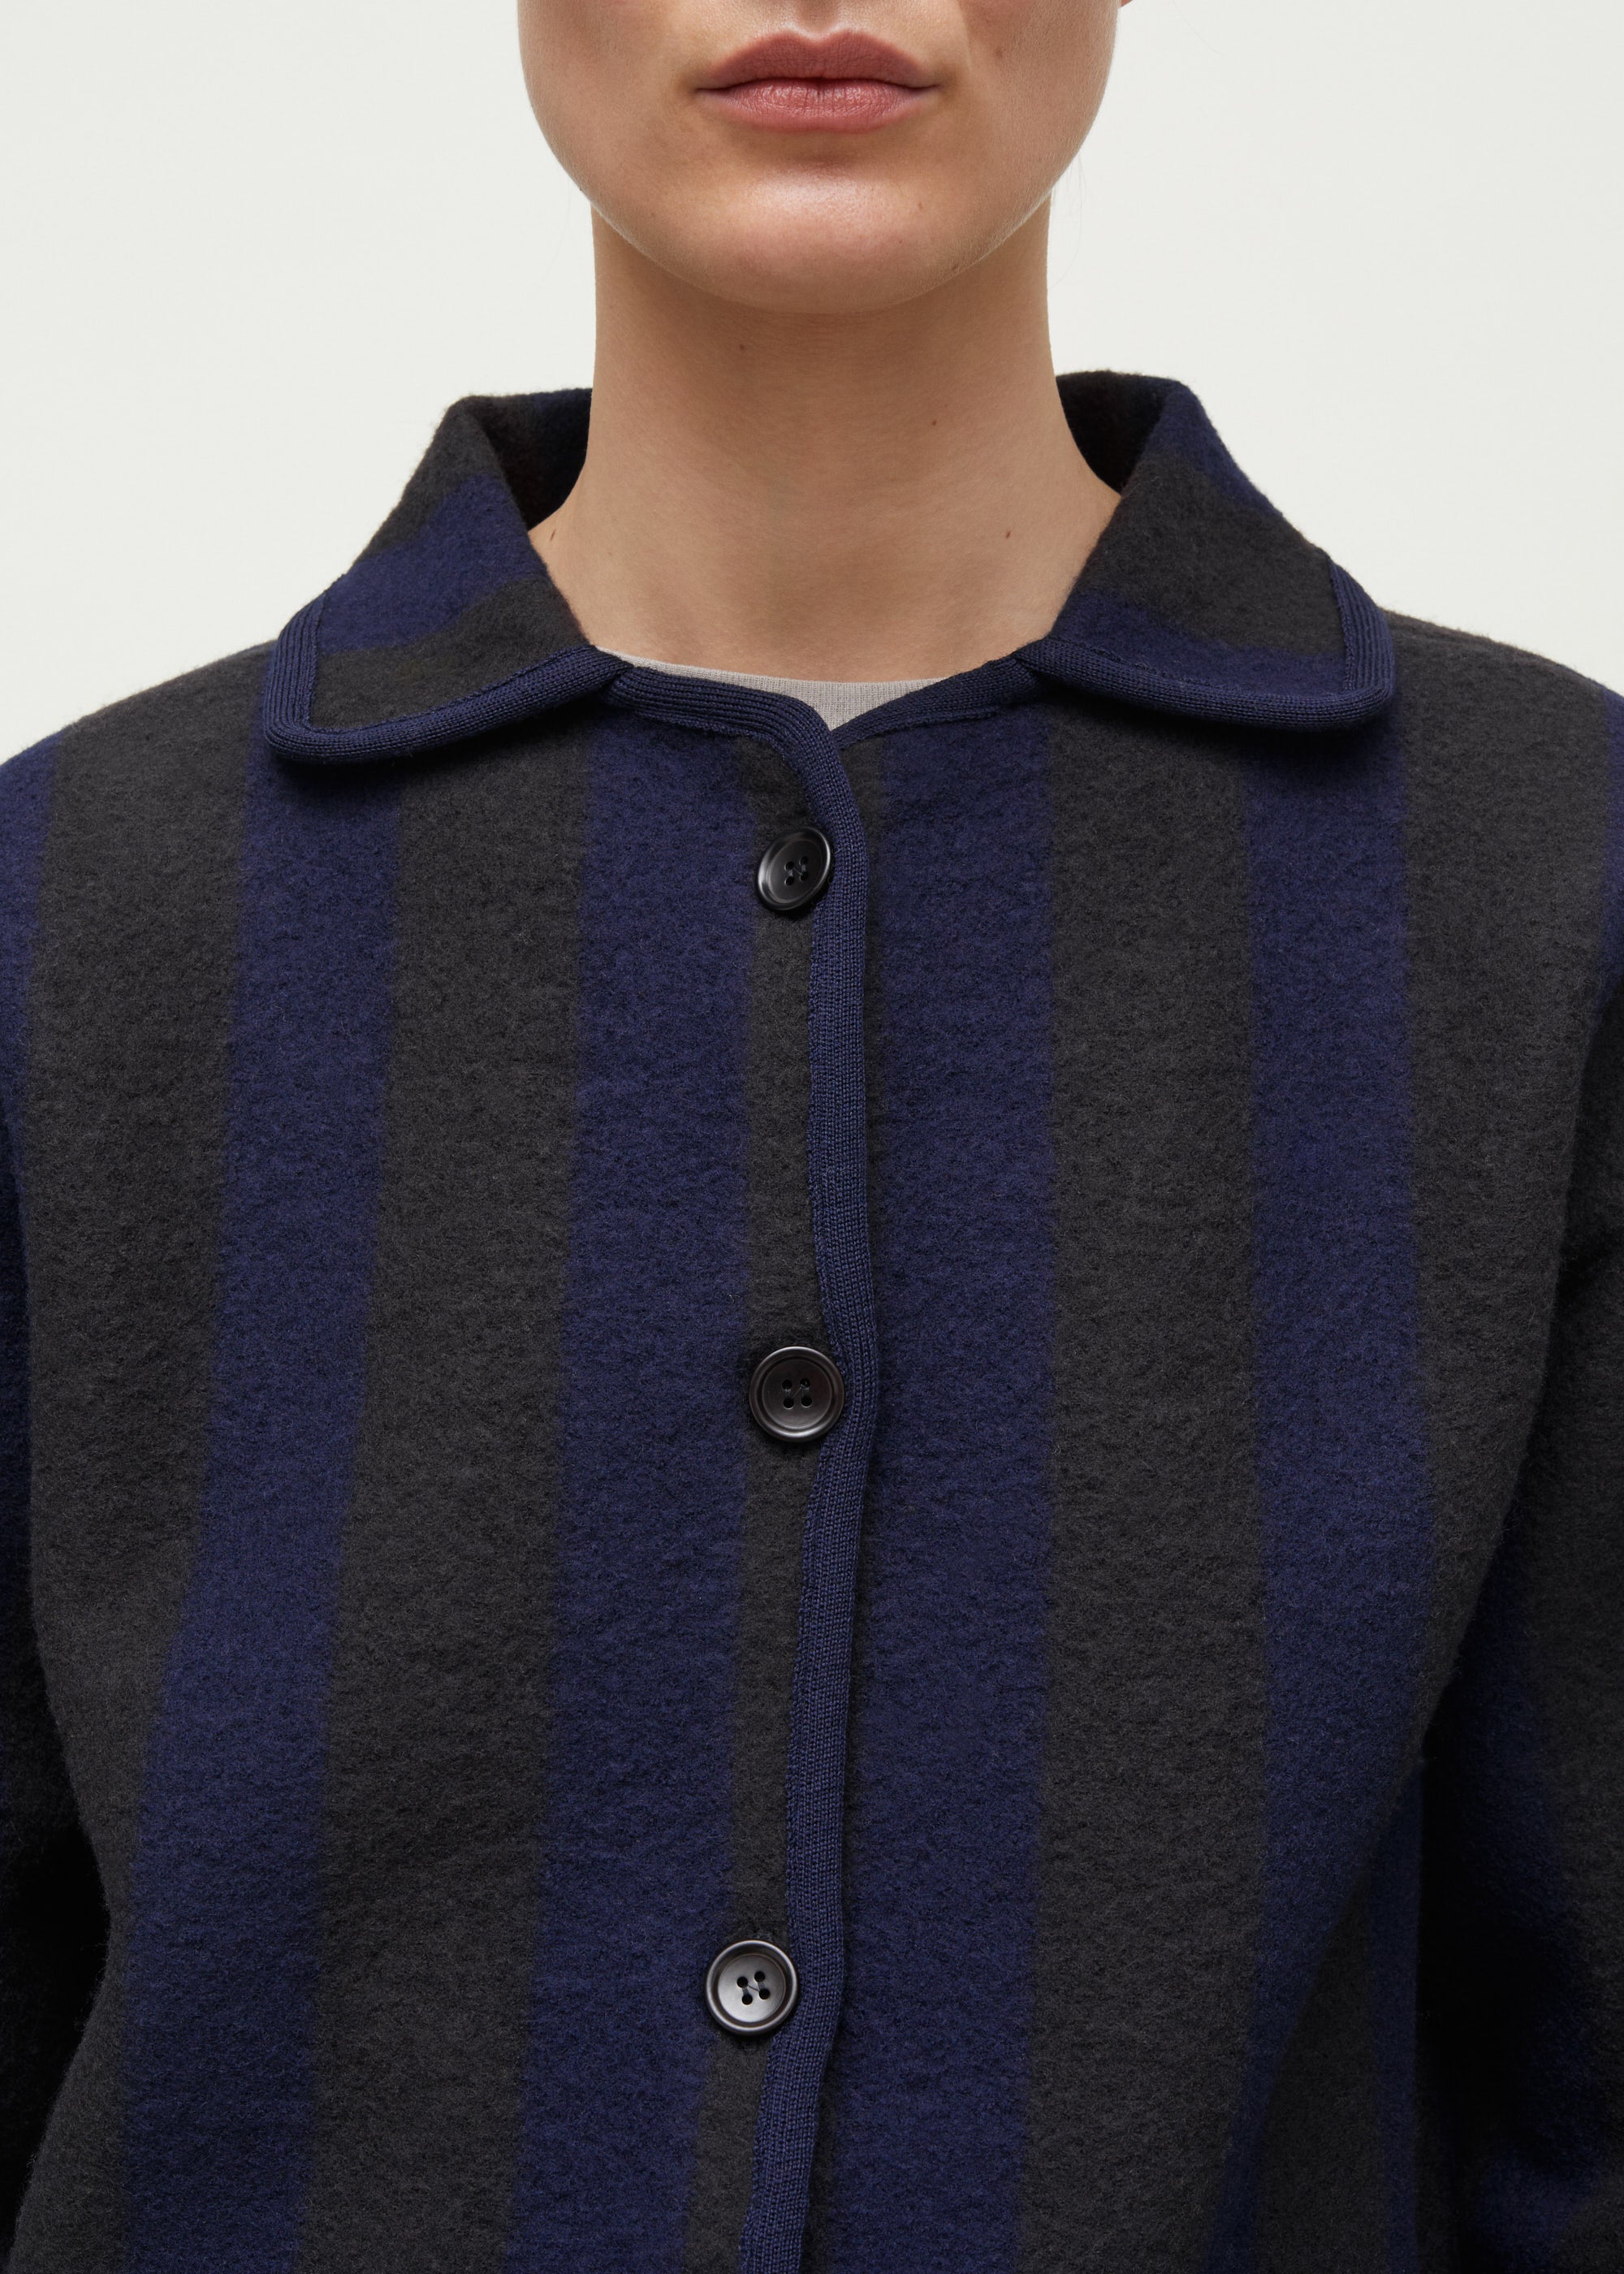 Ethan wool jacket | Mix Brown